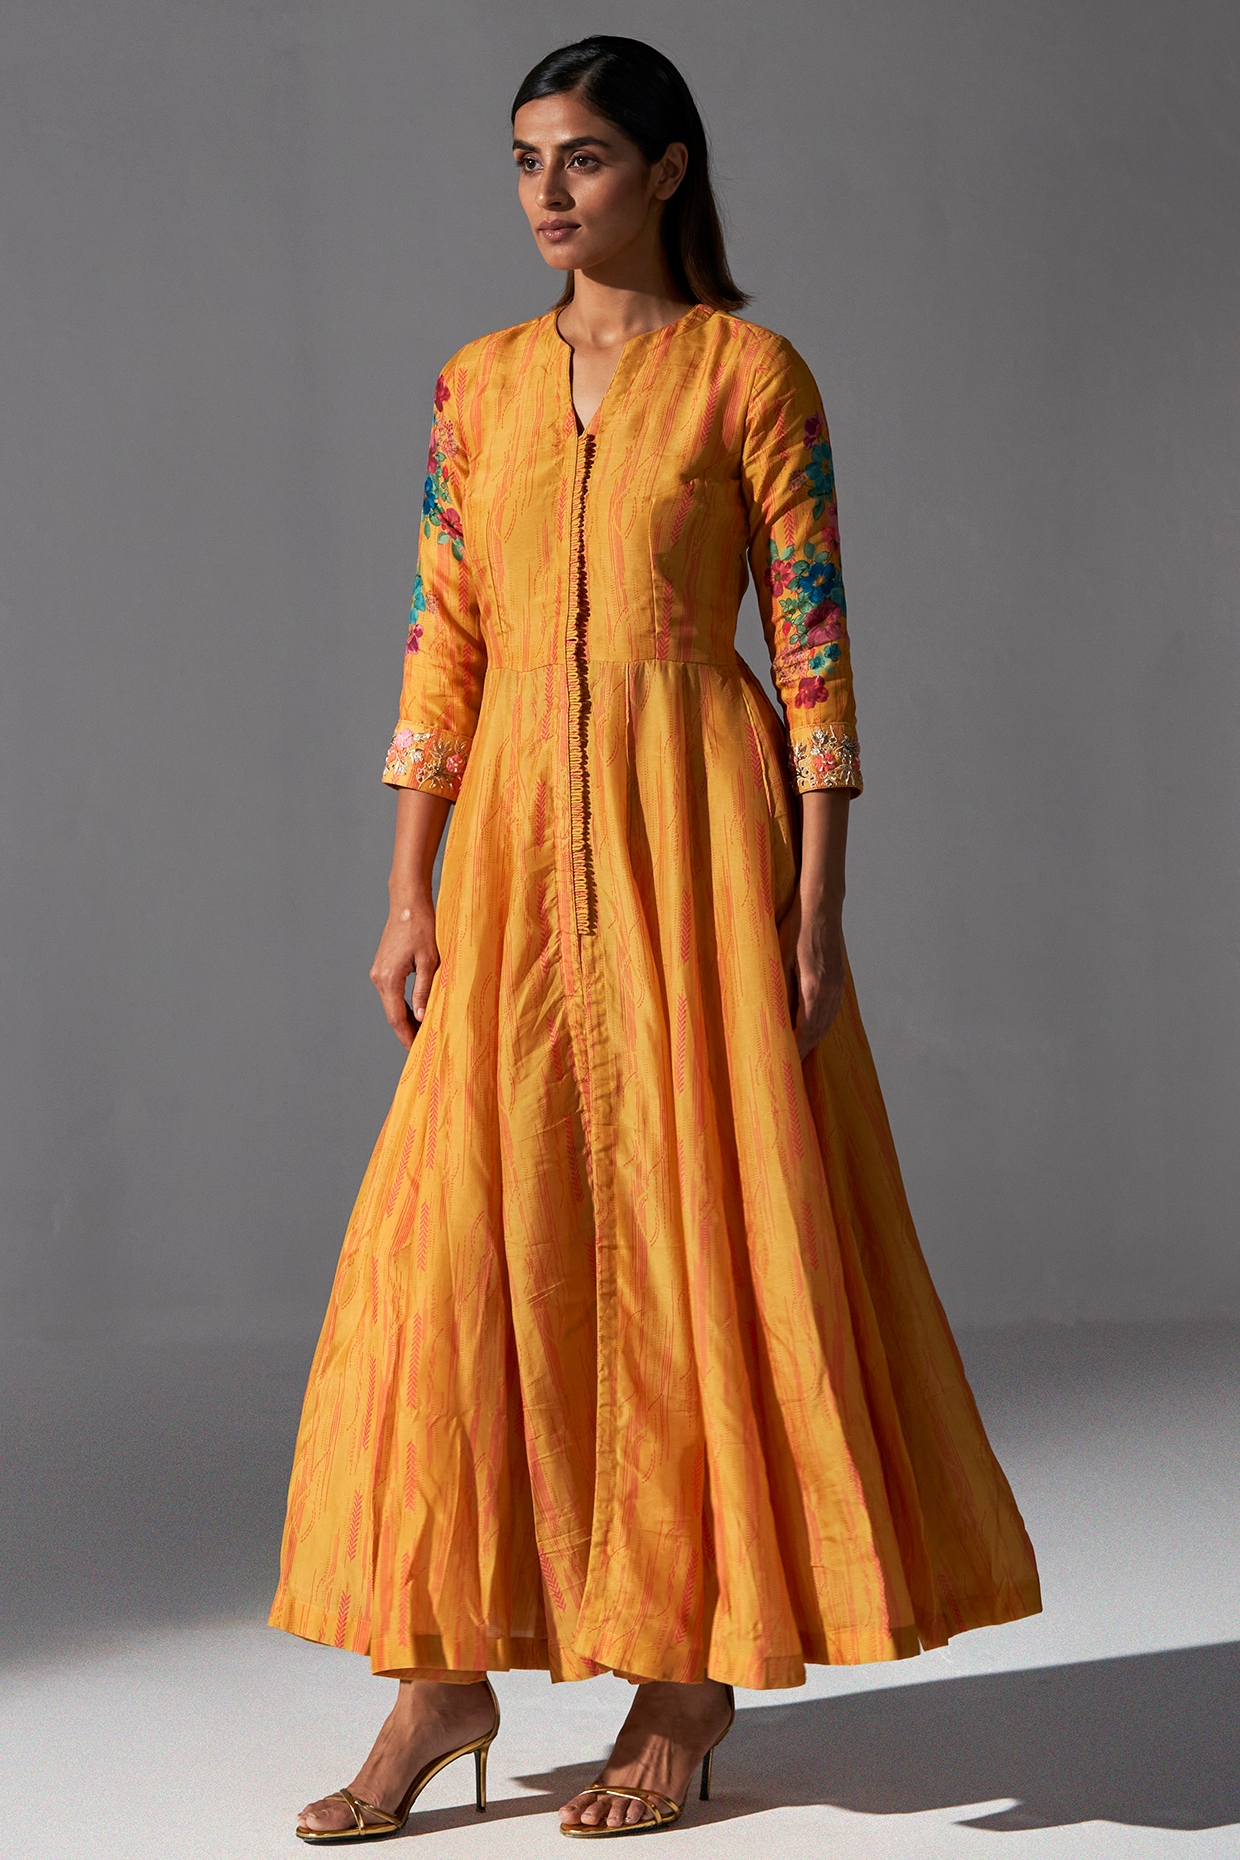 Rang Jah | Pakistani Designer Dresses online in UK and USA